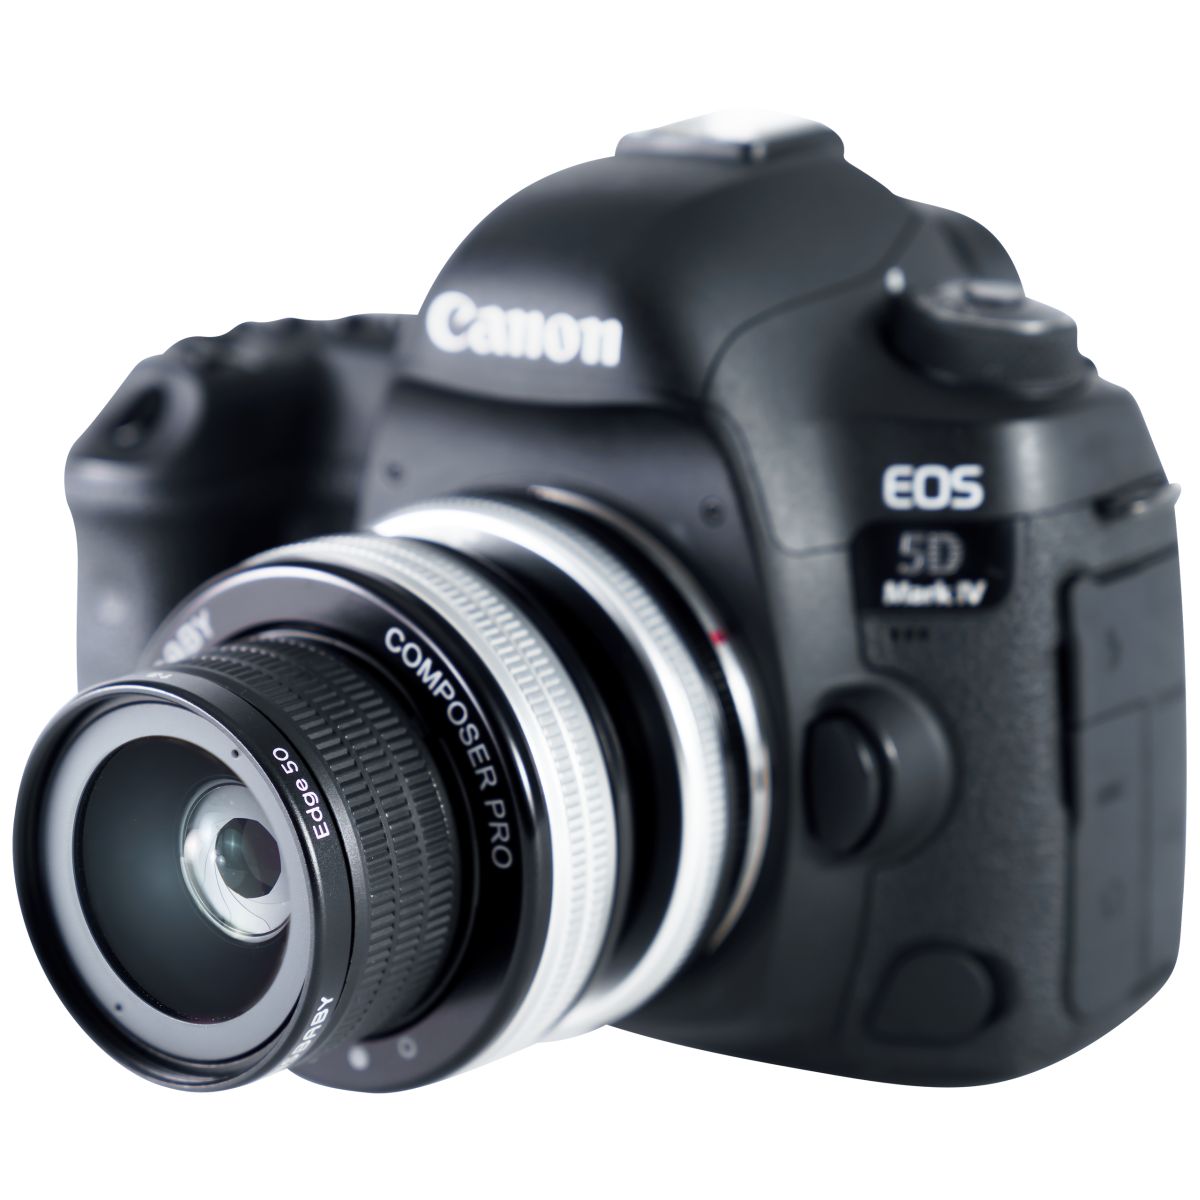 Lensbaby Composer Pro II Edge 50 Canon EF